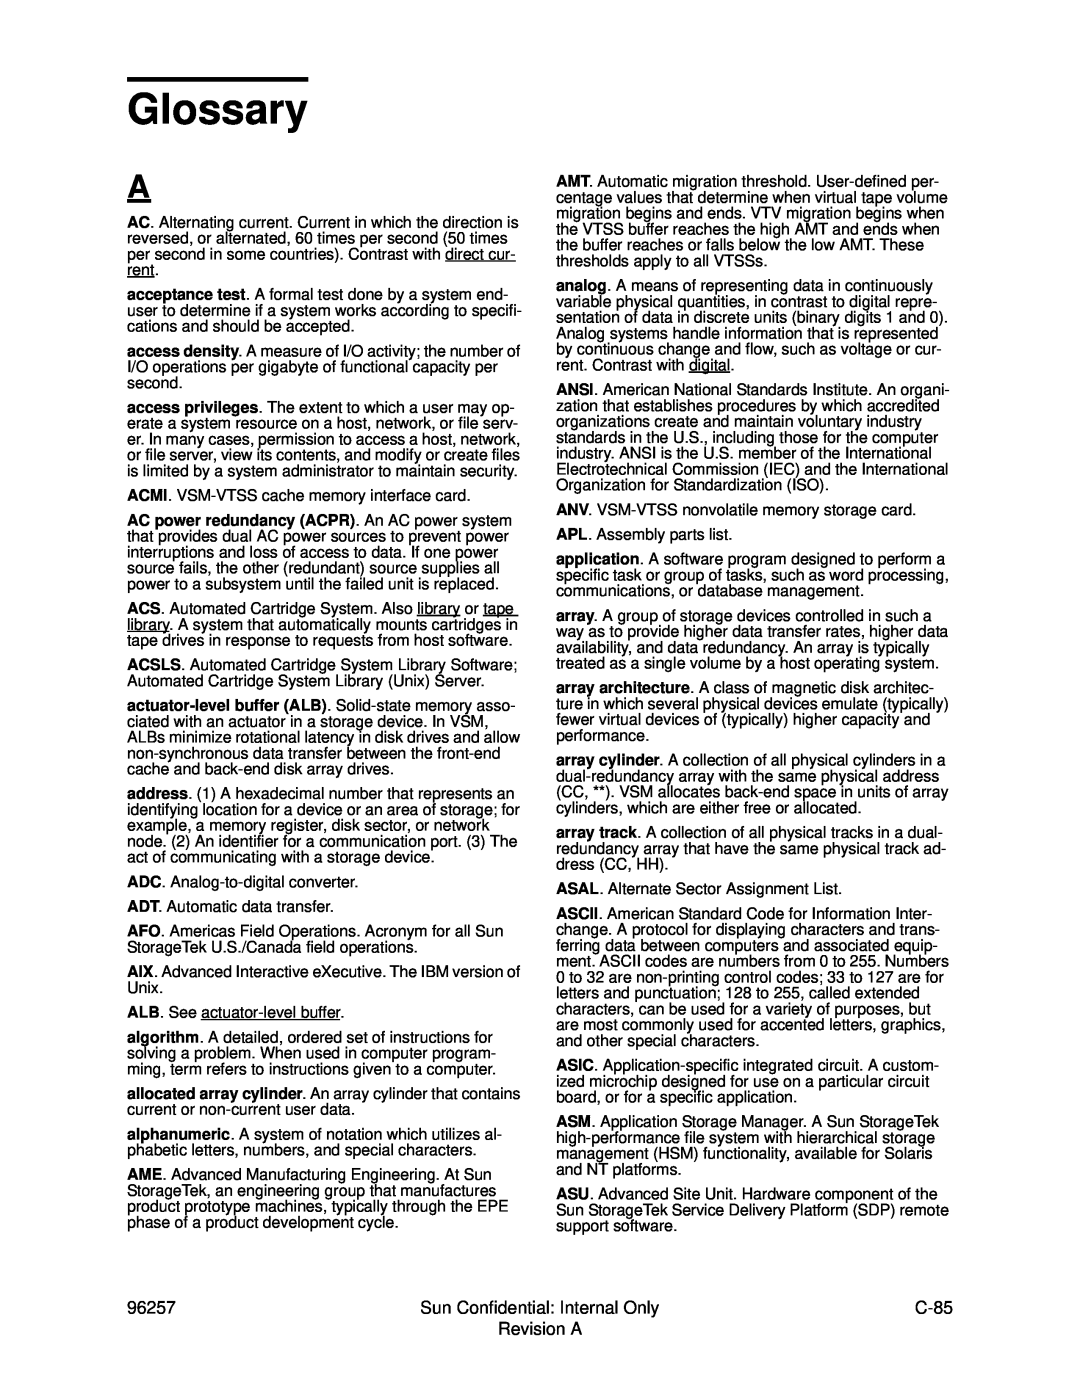 Sun Microsystems 96257 manual Glossary 